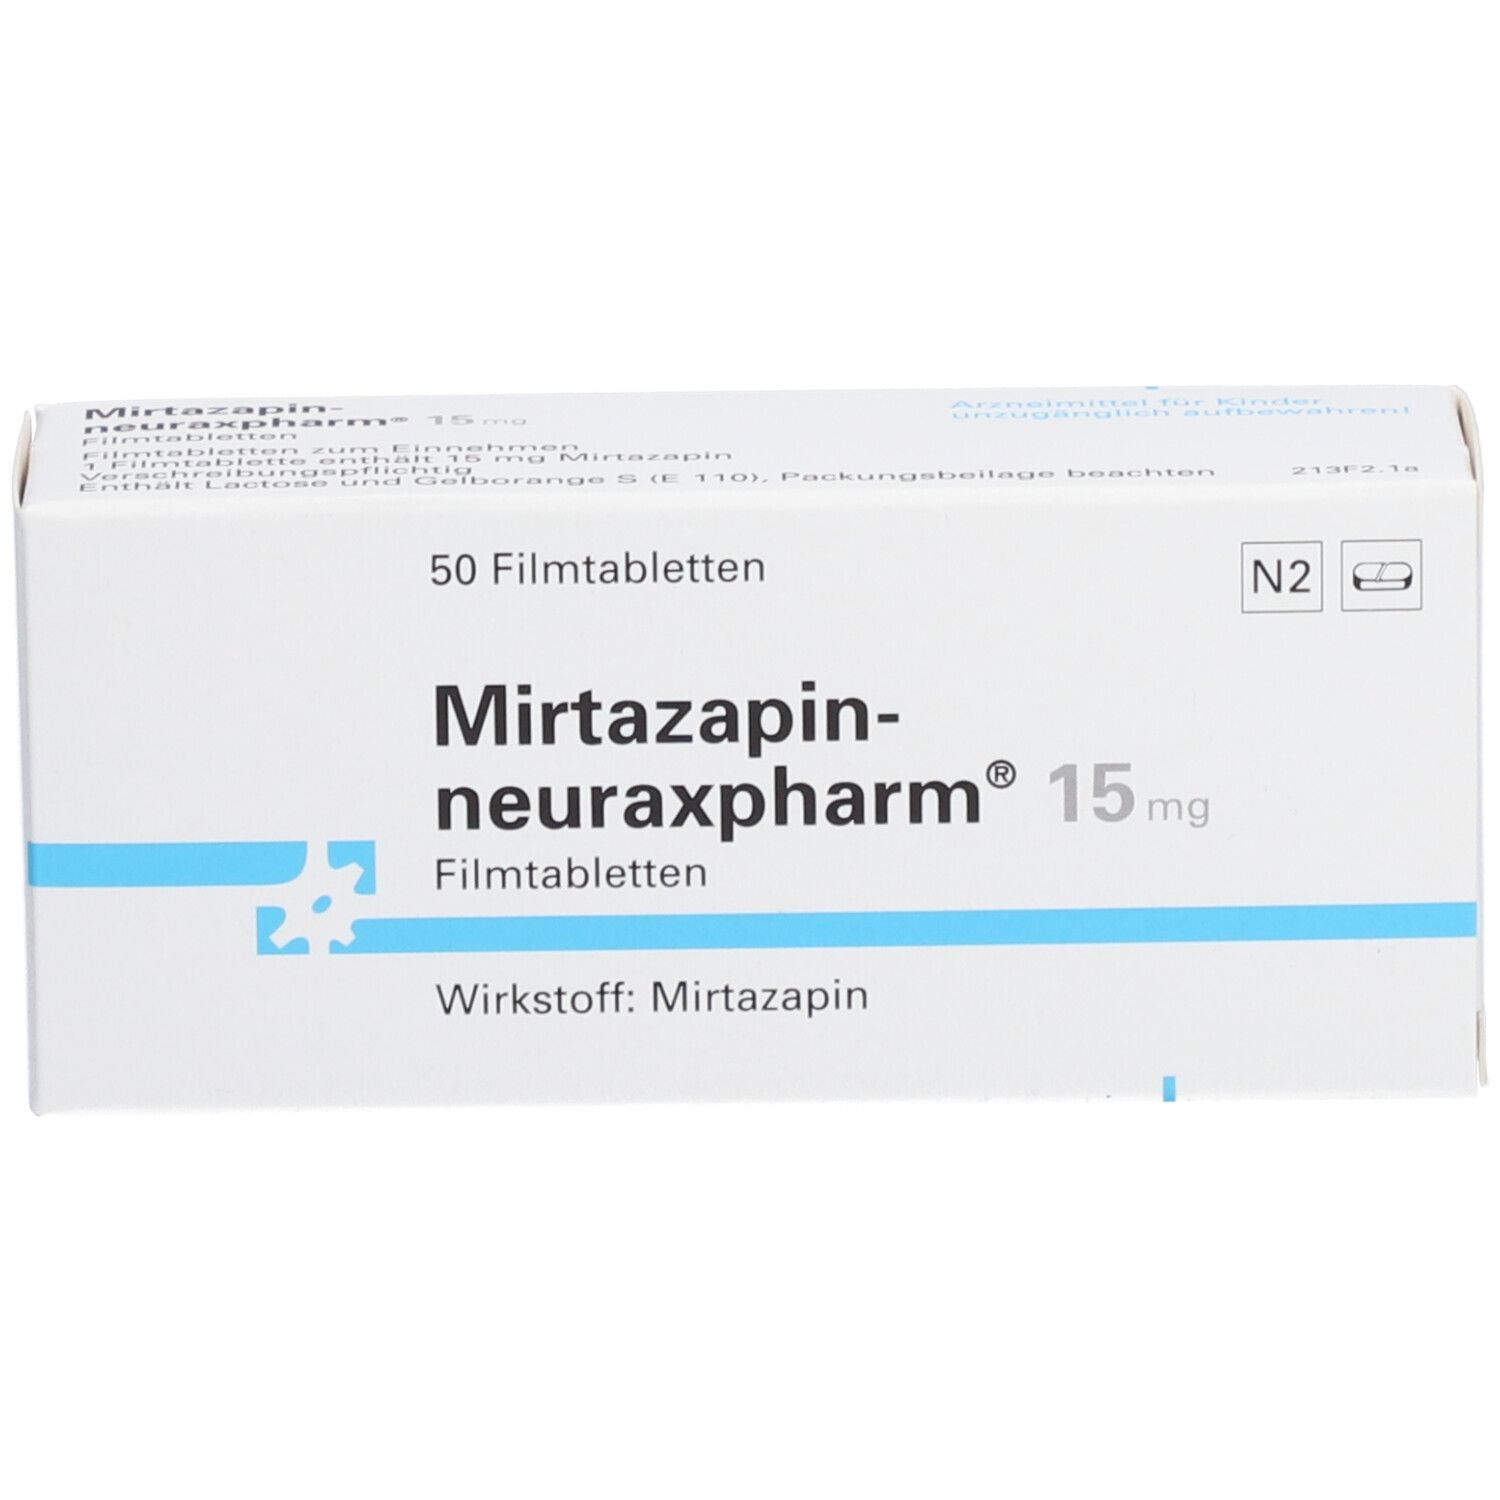 Mirtazapin-neuraxpharm® 15 mg